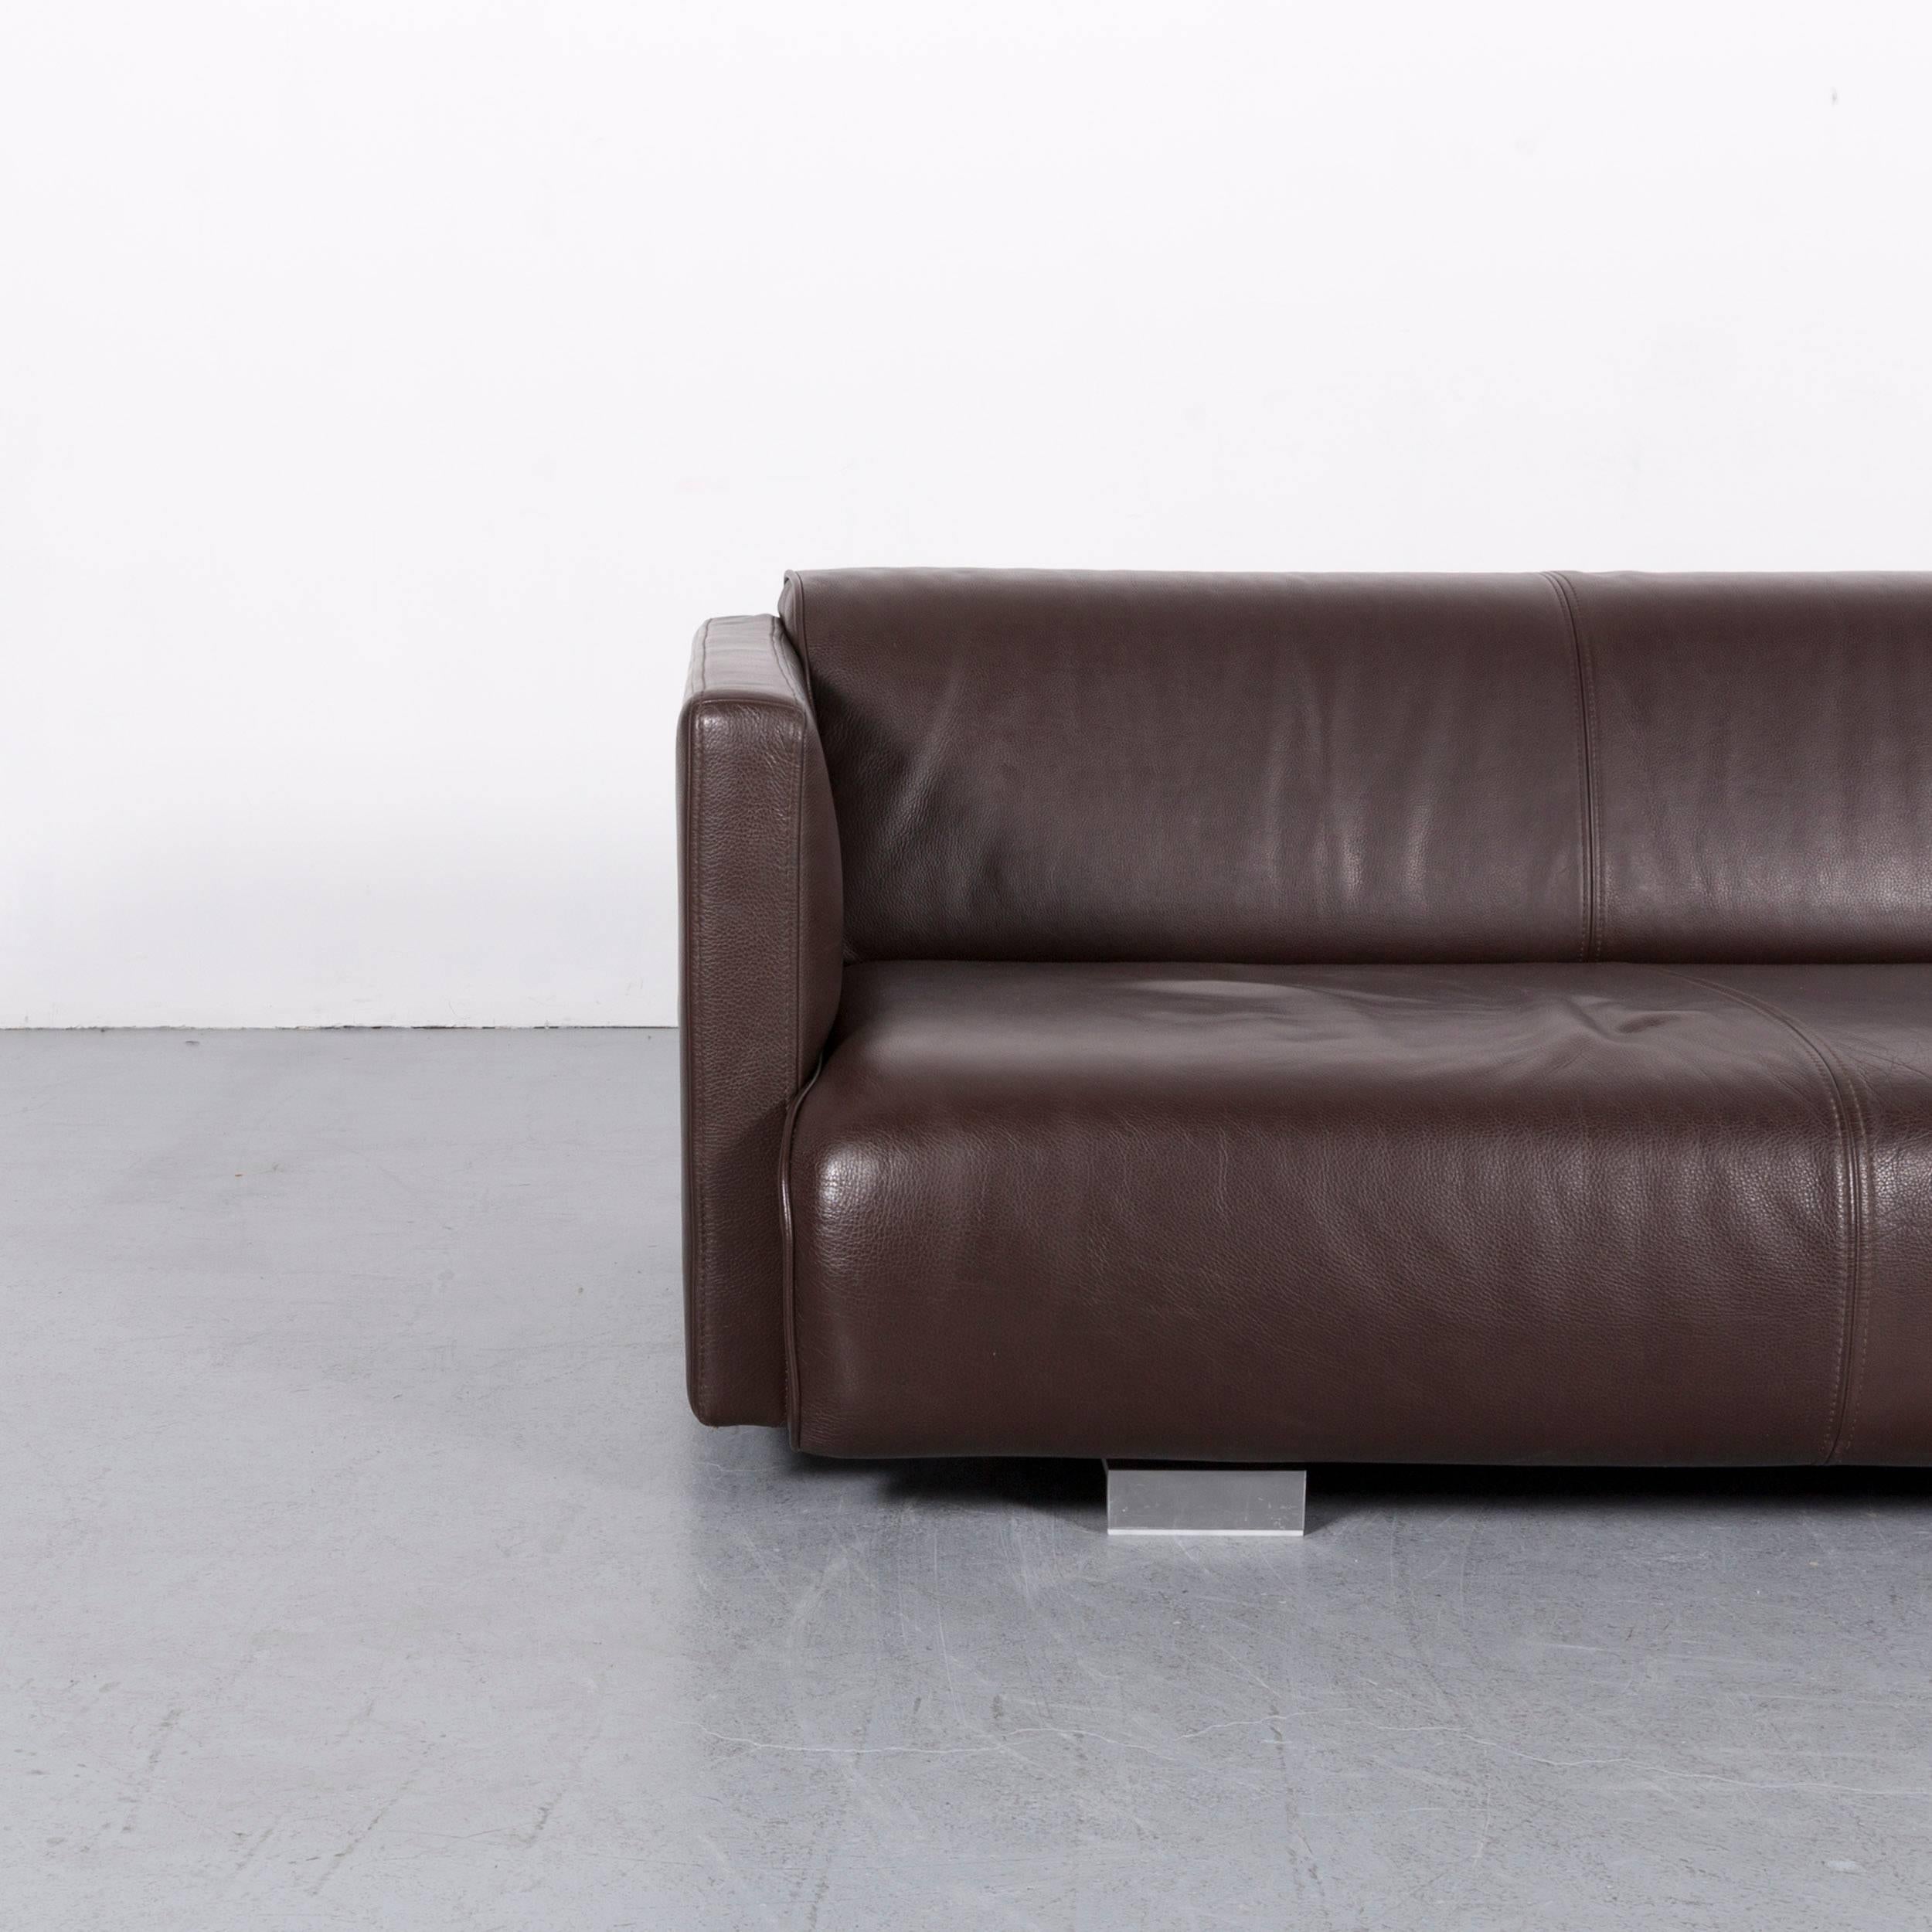 German Rolf Benz 6300 Sofa Set Leather Brown Three-Seat Bench